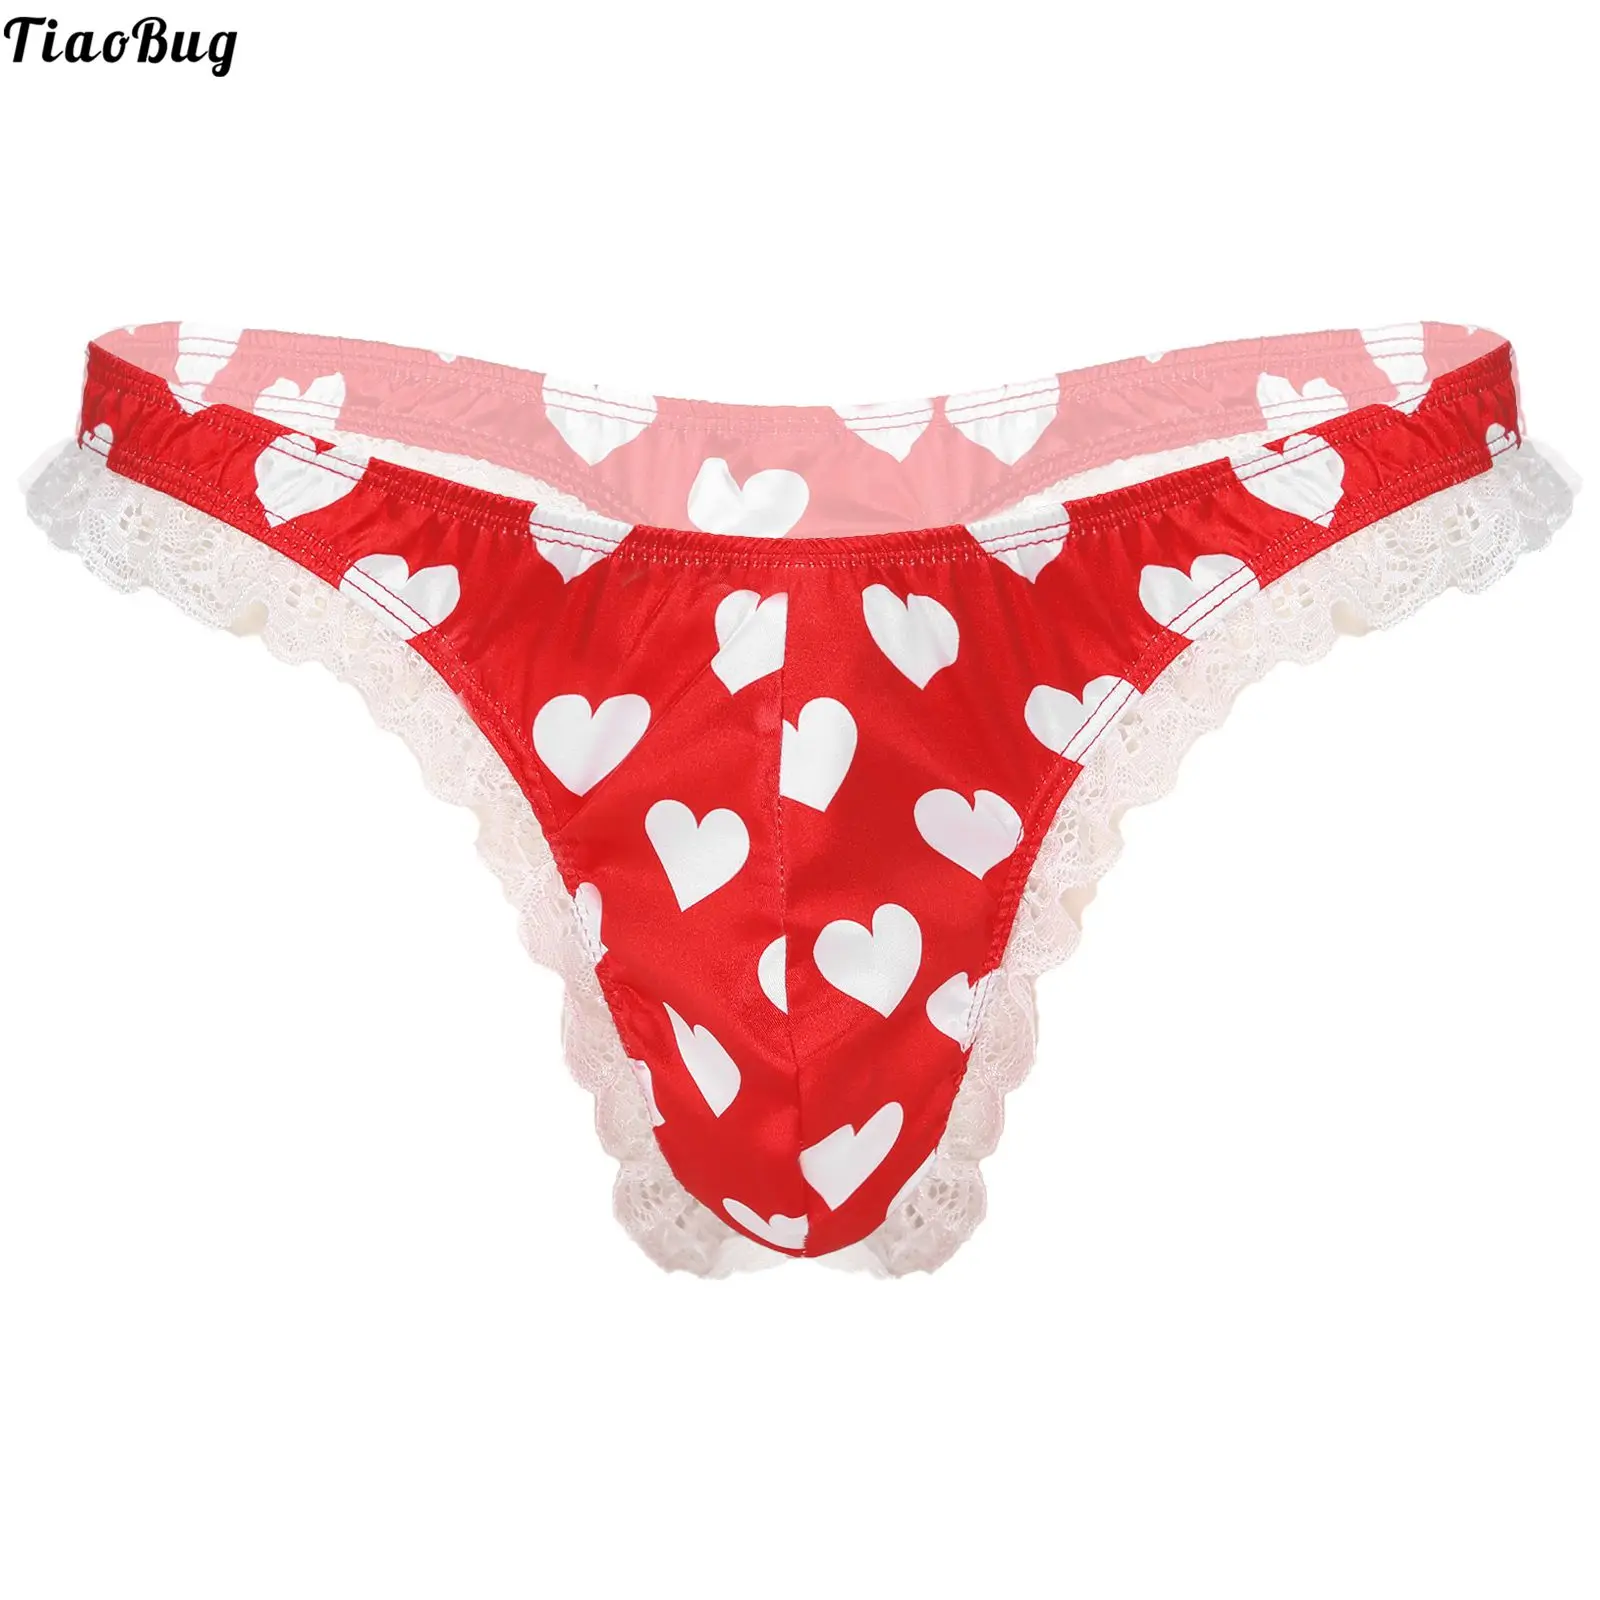 

TiaoBug Mens Sissy Gay Lingerie Shiny Low Rise High Cut Ruffle Lace Polka Dots Briefs G-String Thong Underwear Underpants Bikini